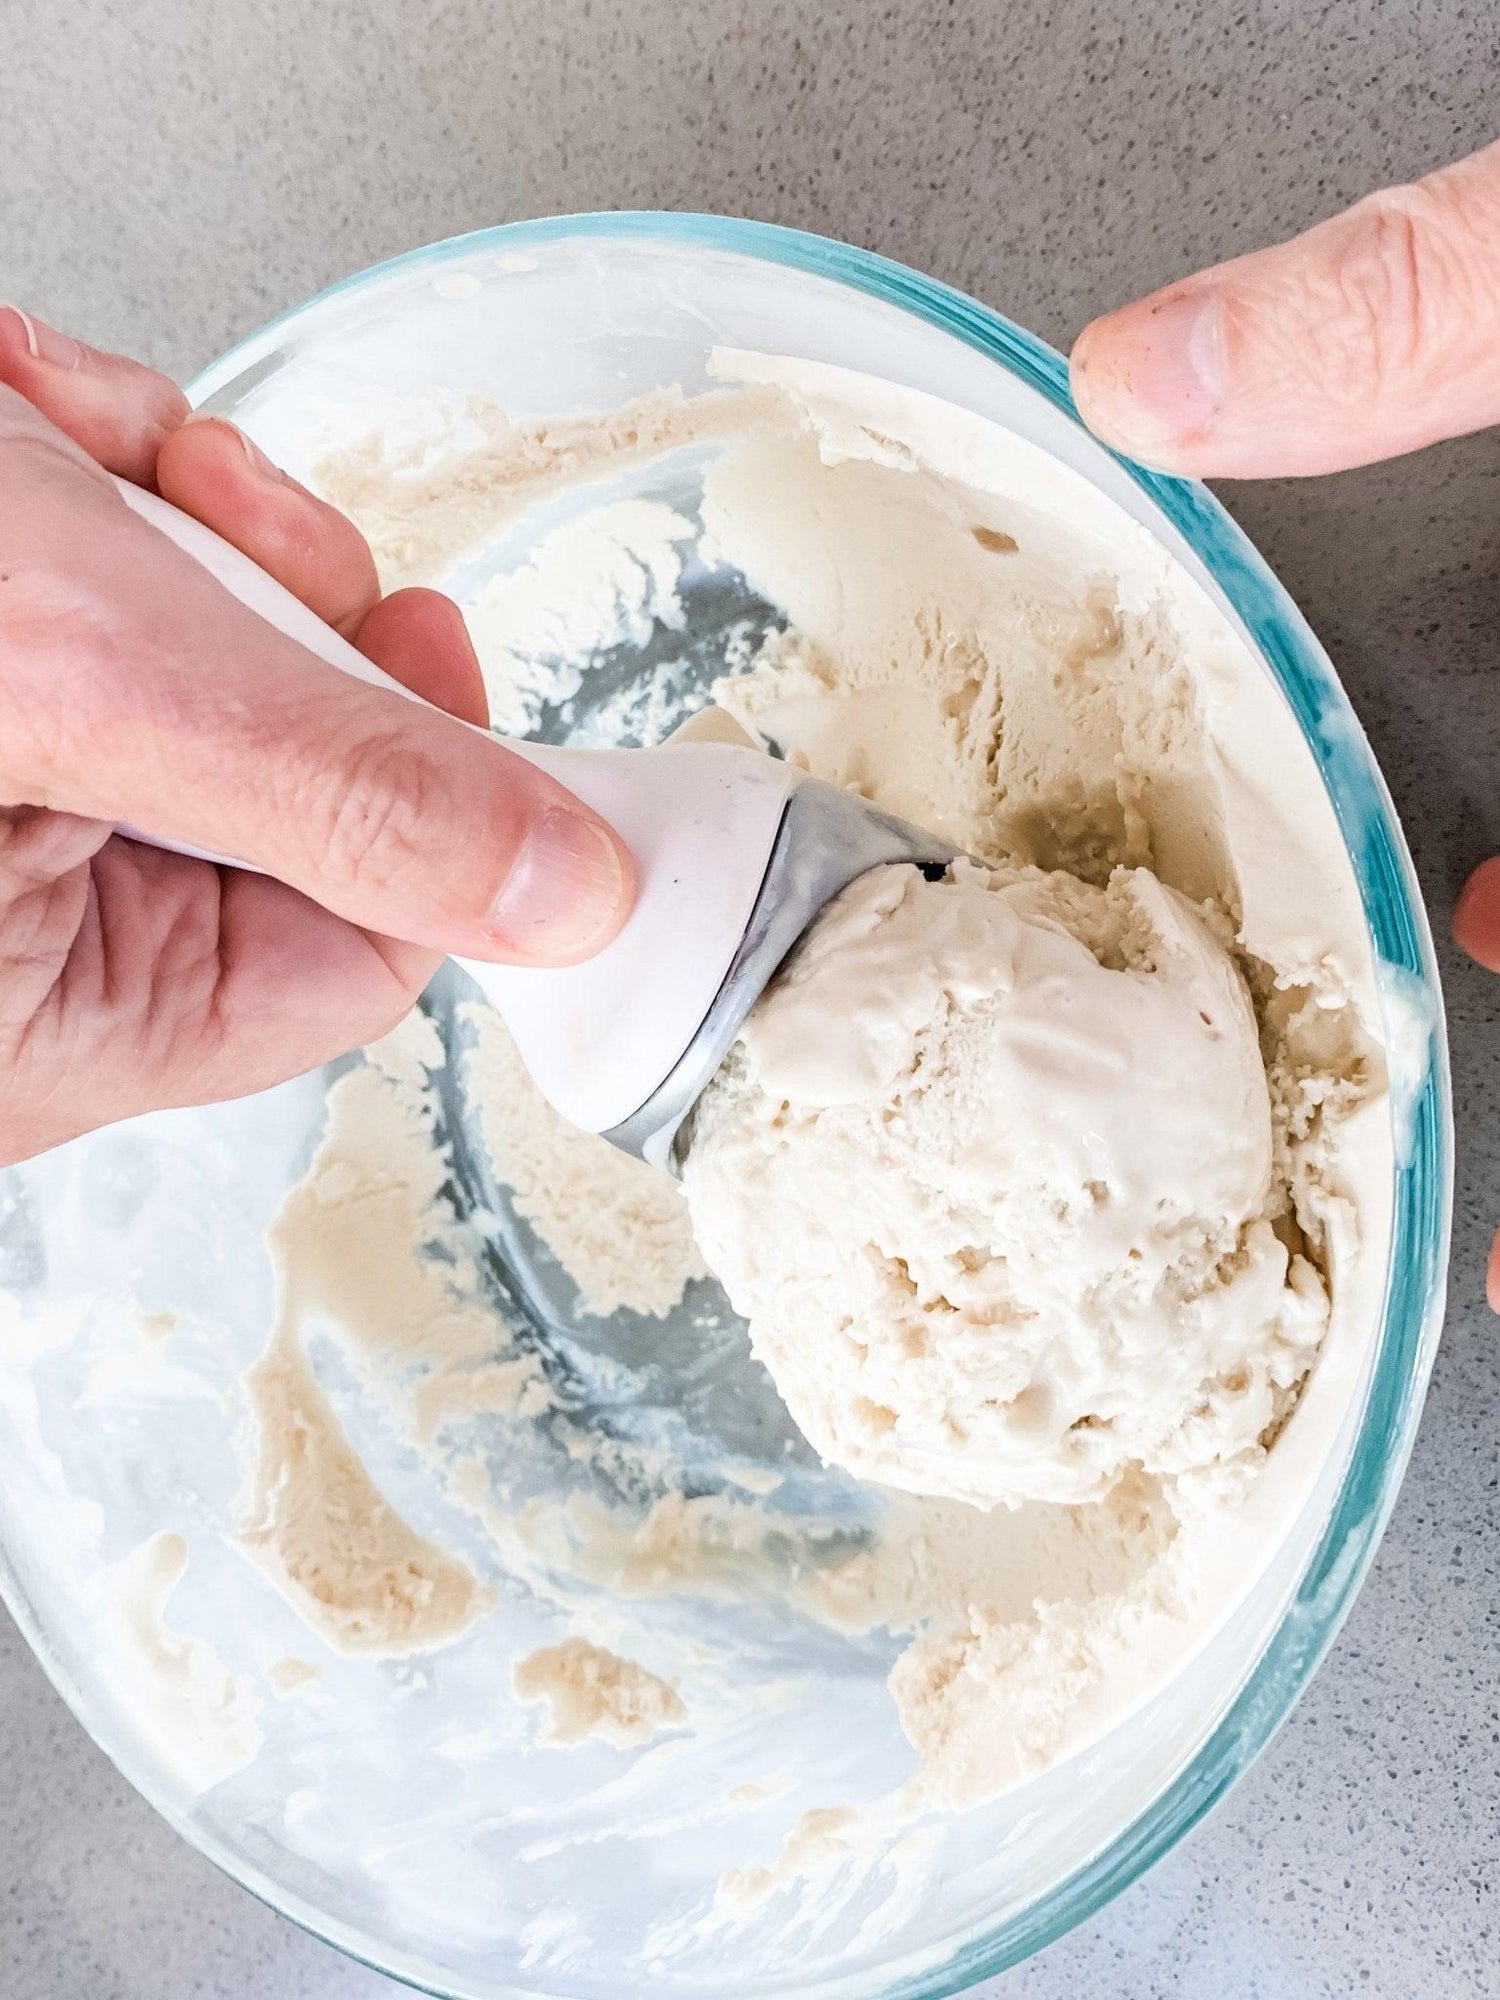 Creating Unique Ice Cream Flavors with Tea - Lavender Life Company